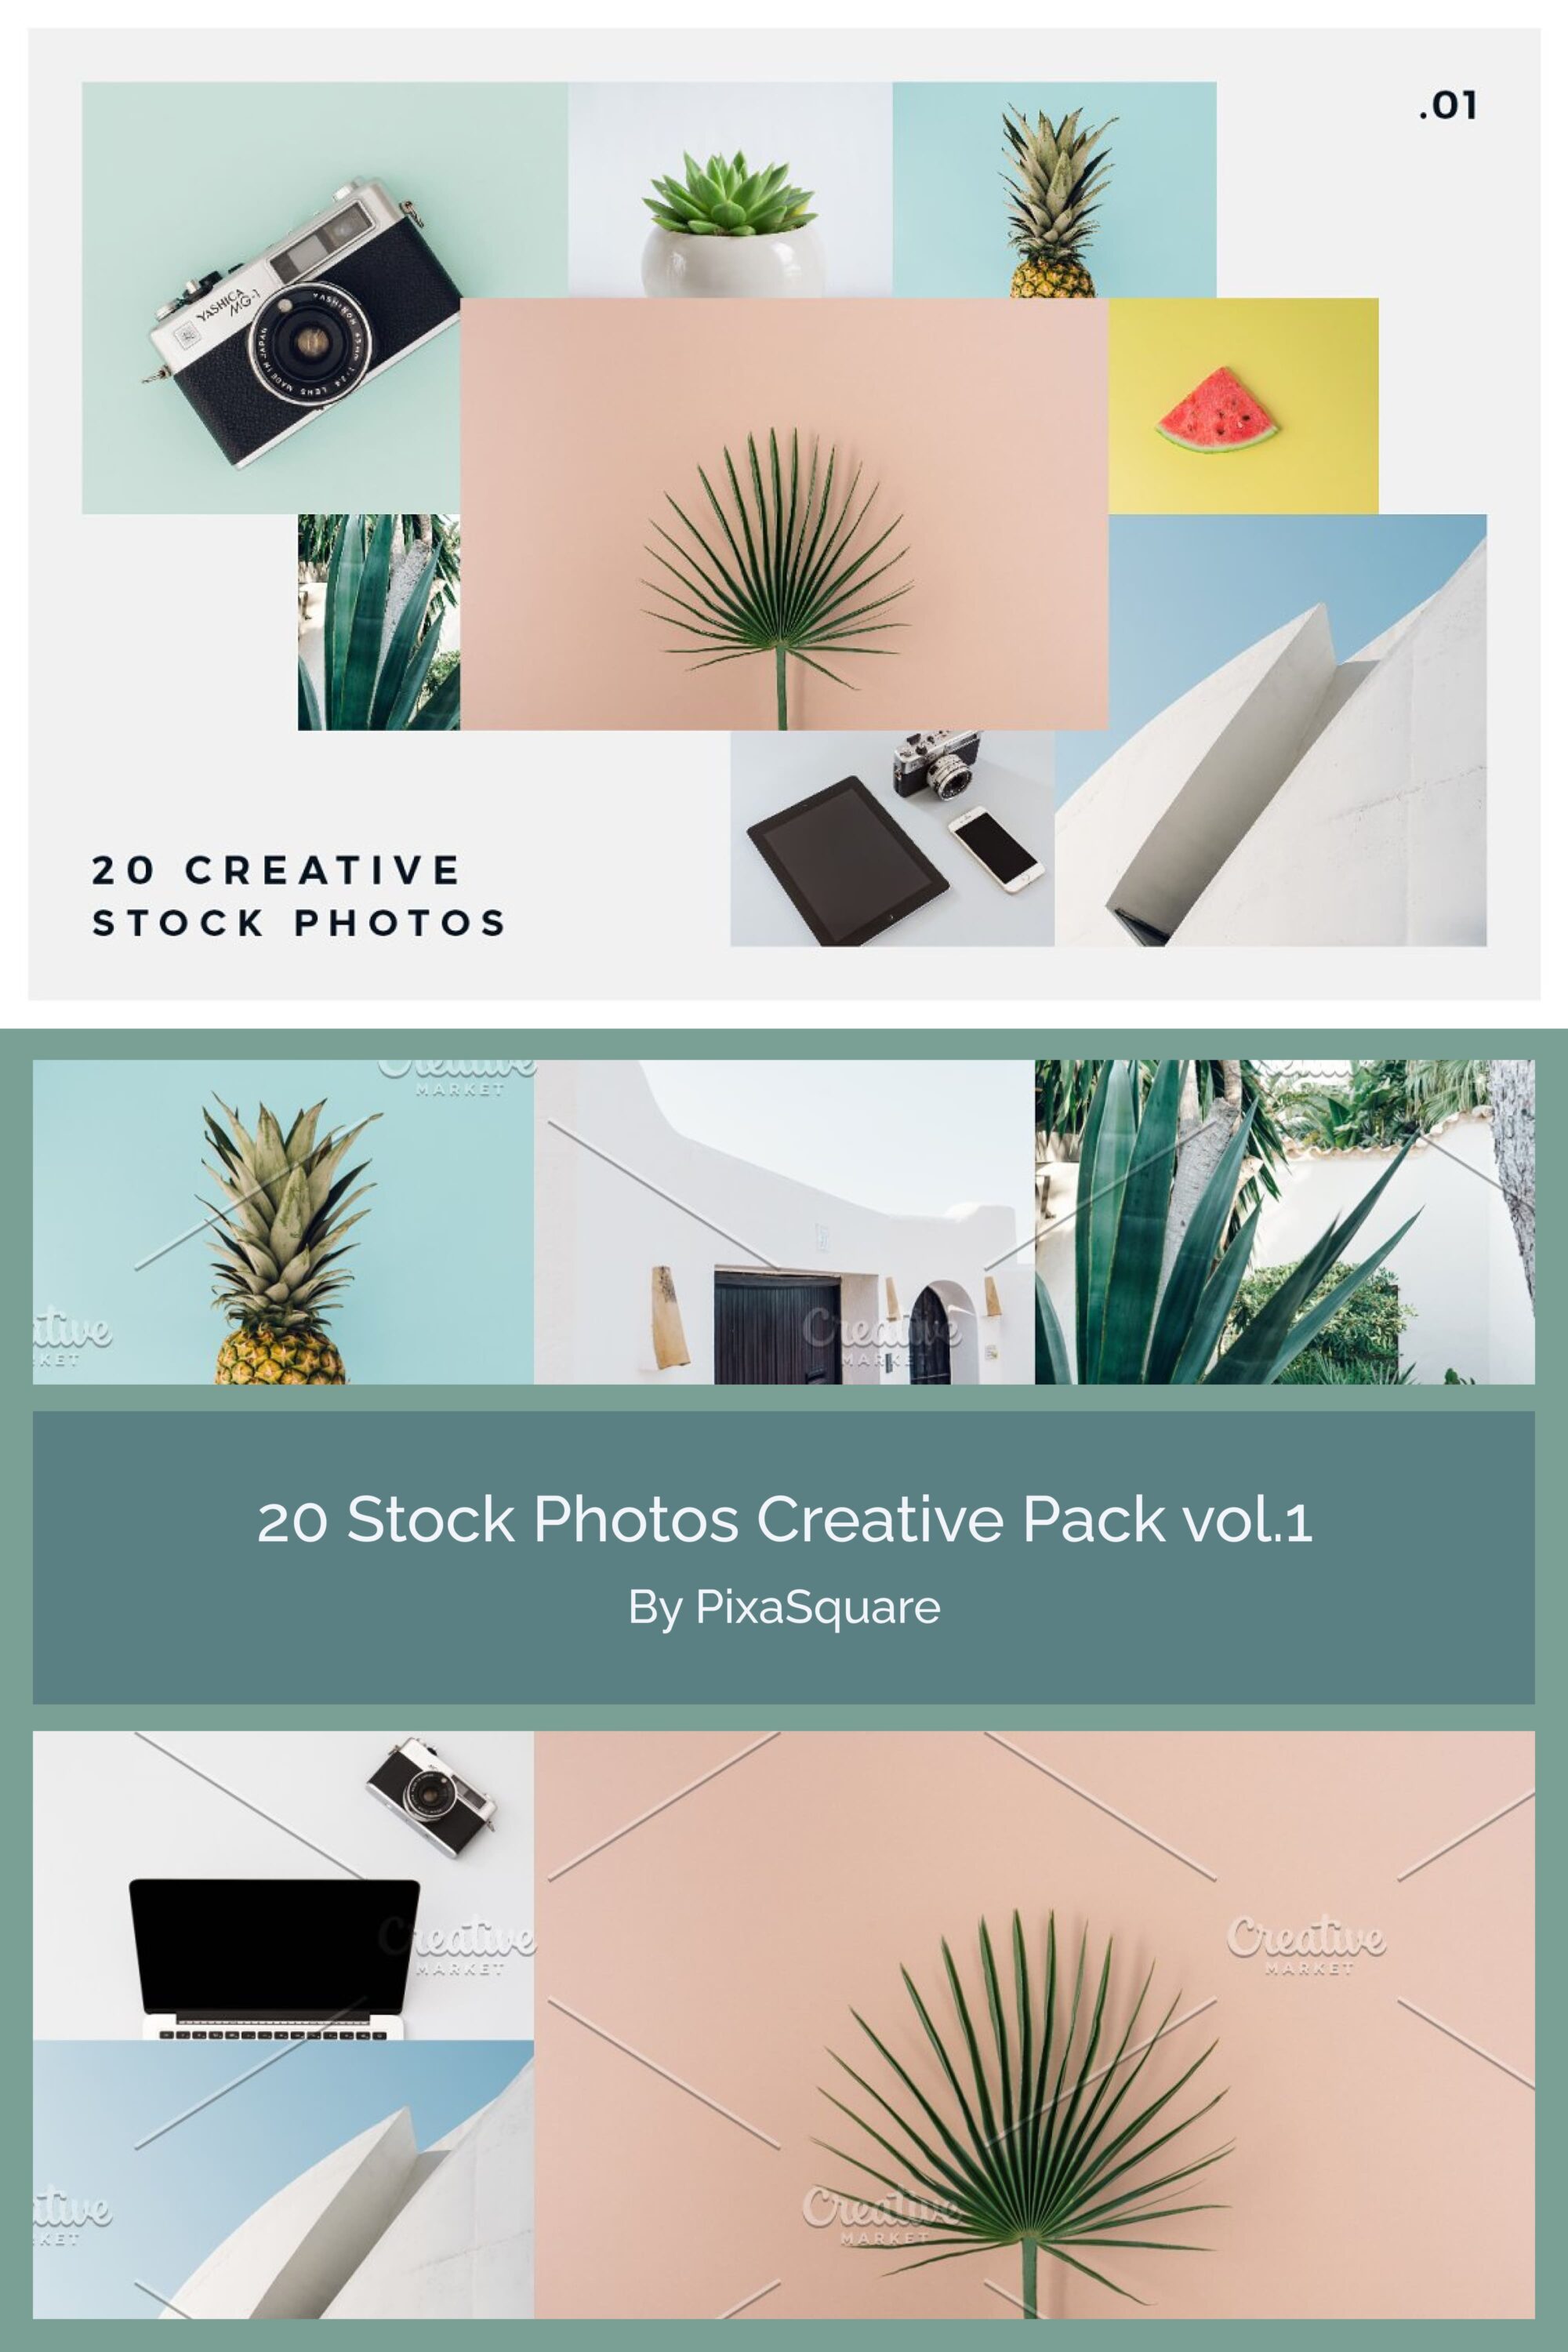 20 Stock Photos Creative Pack Vol.1 - Pinterest.